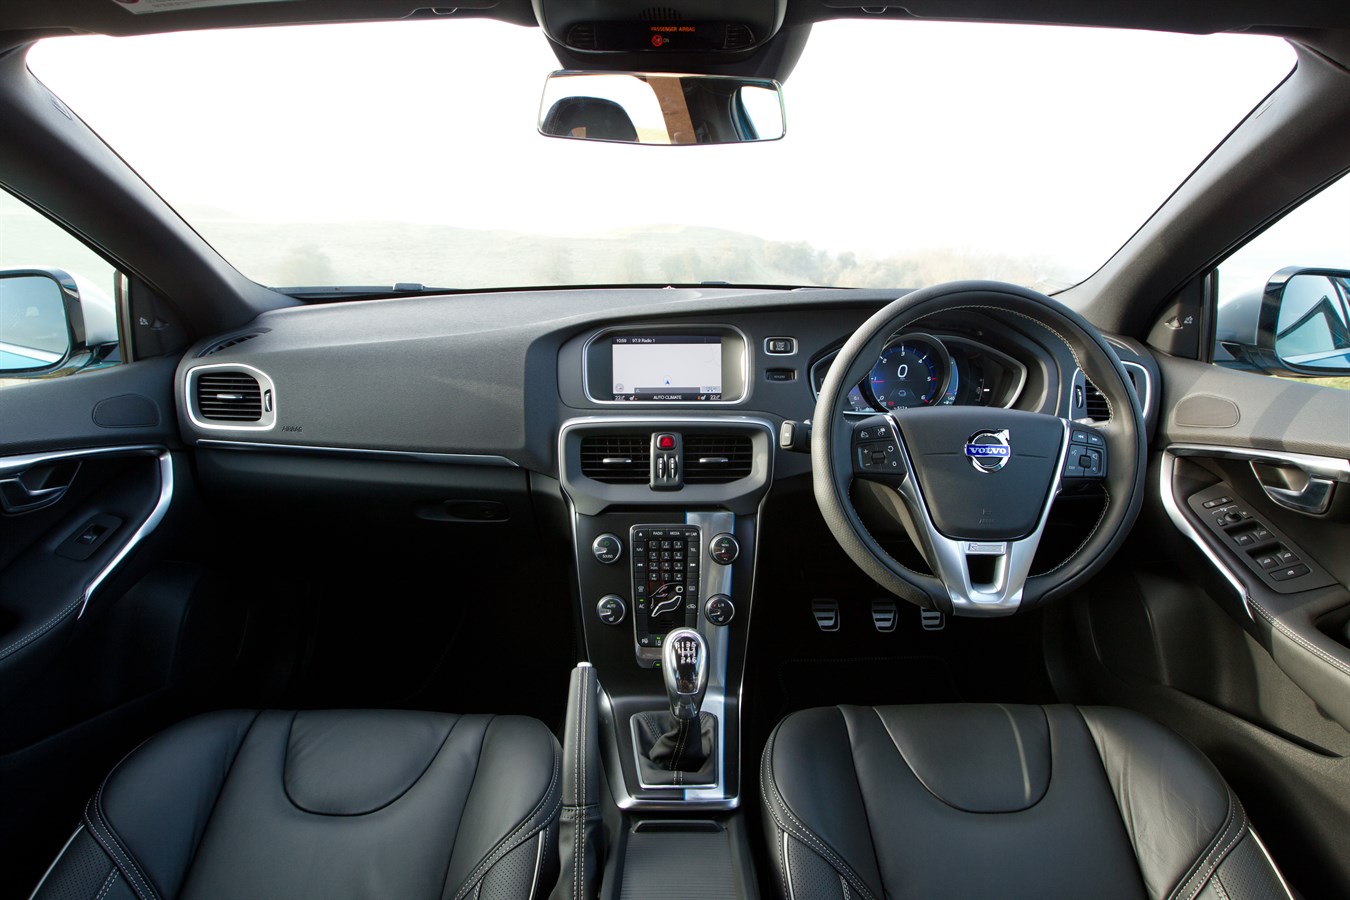 Interior Dashboard Image Of The All New Volvo V40 R Design